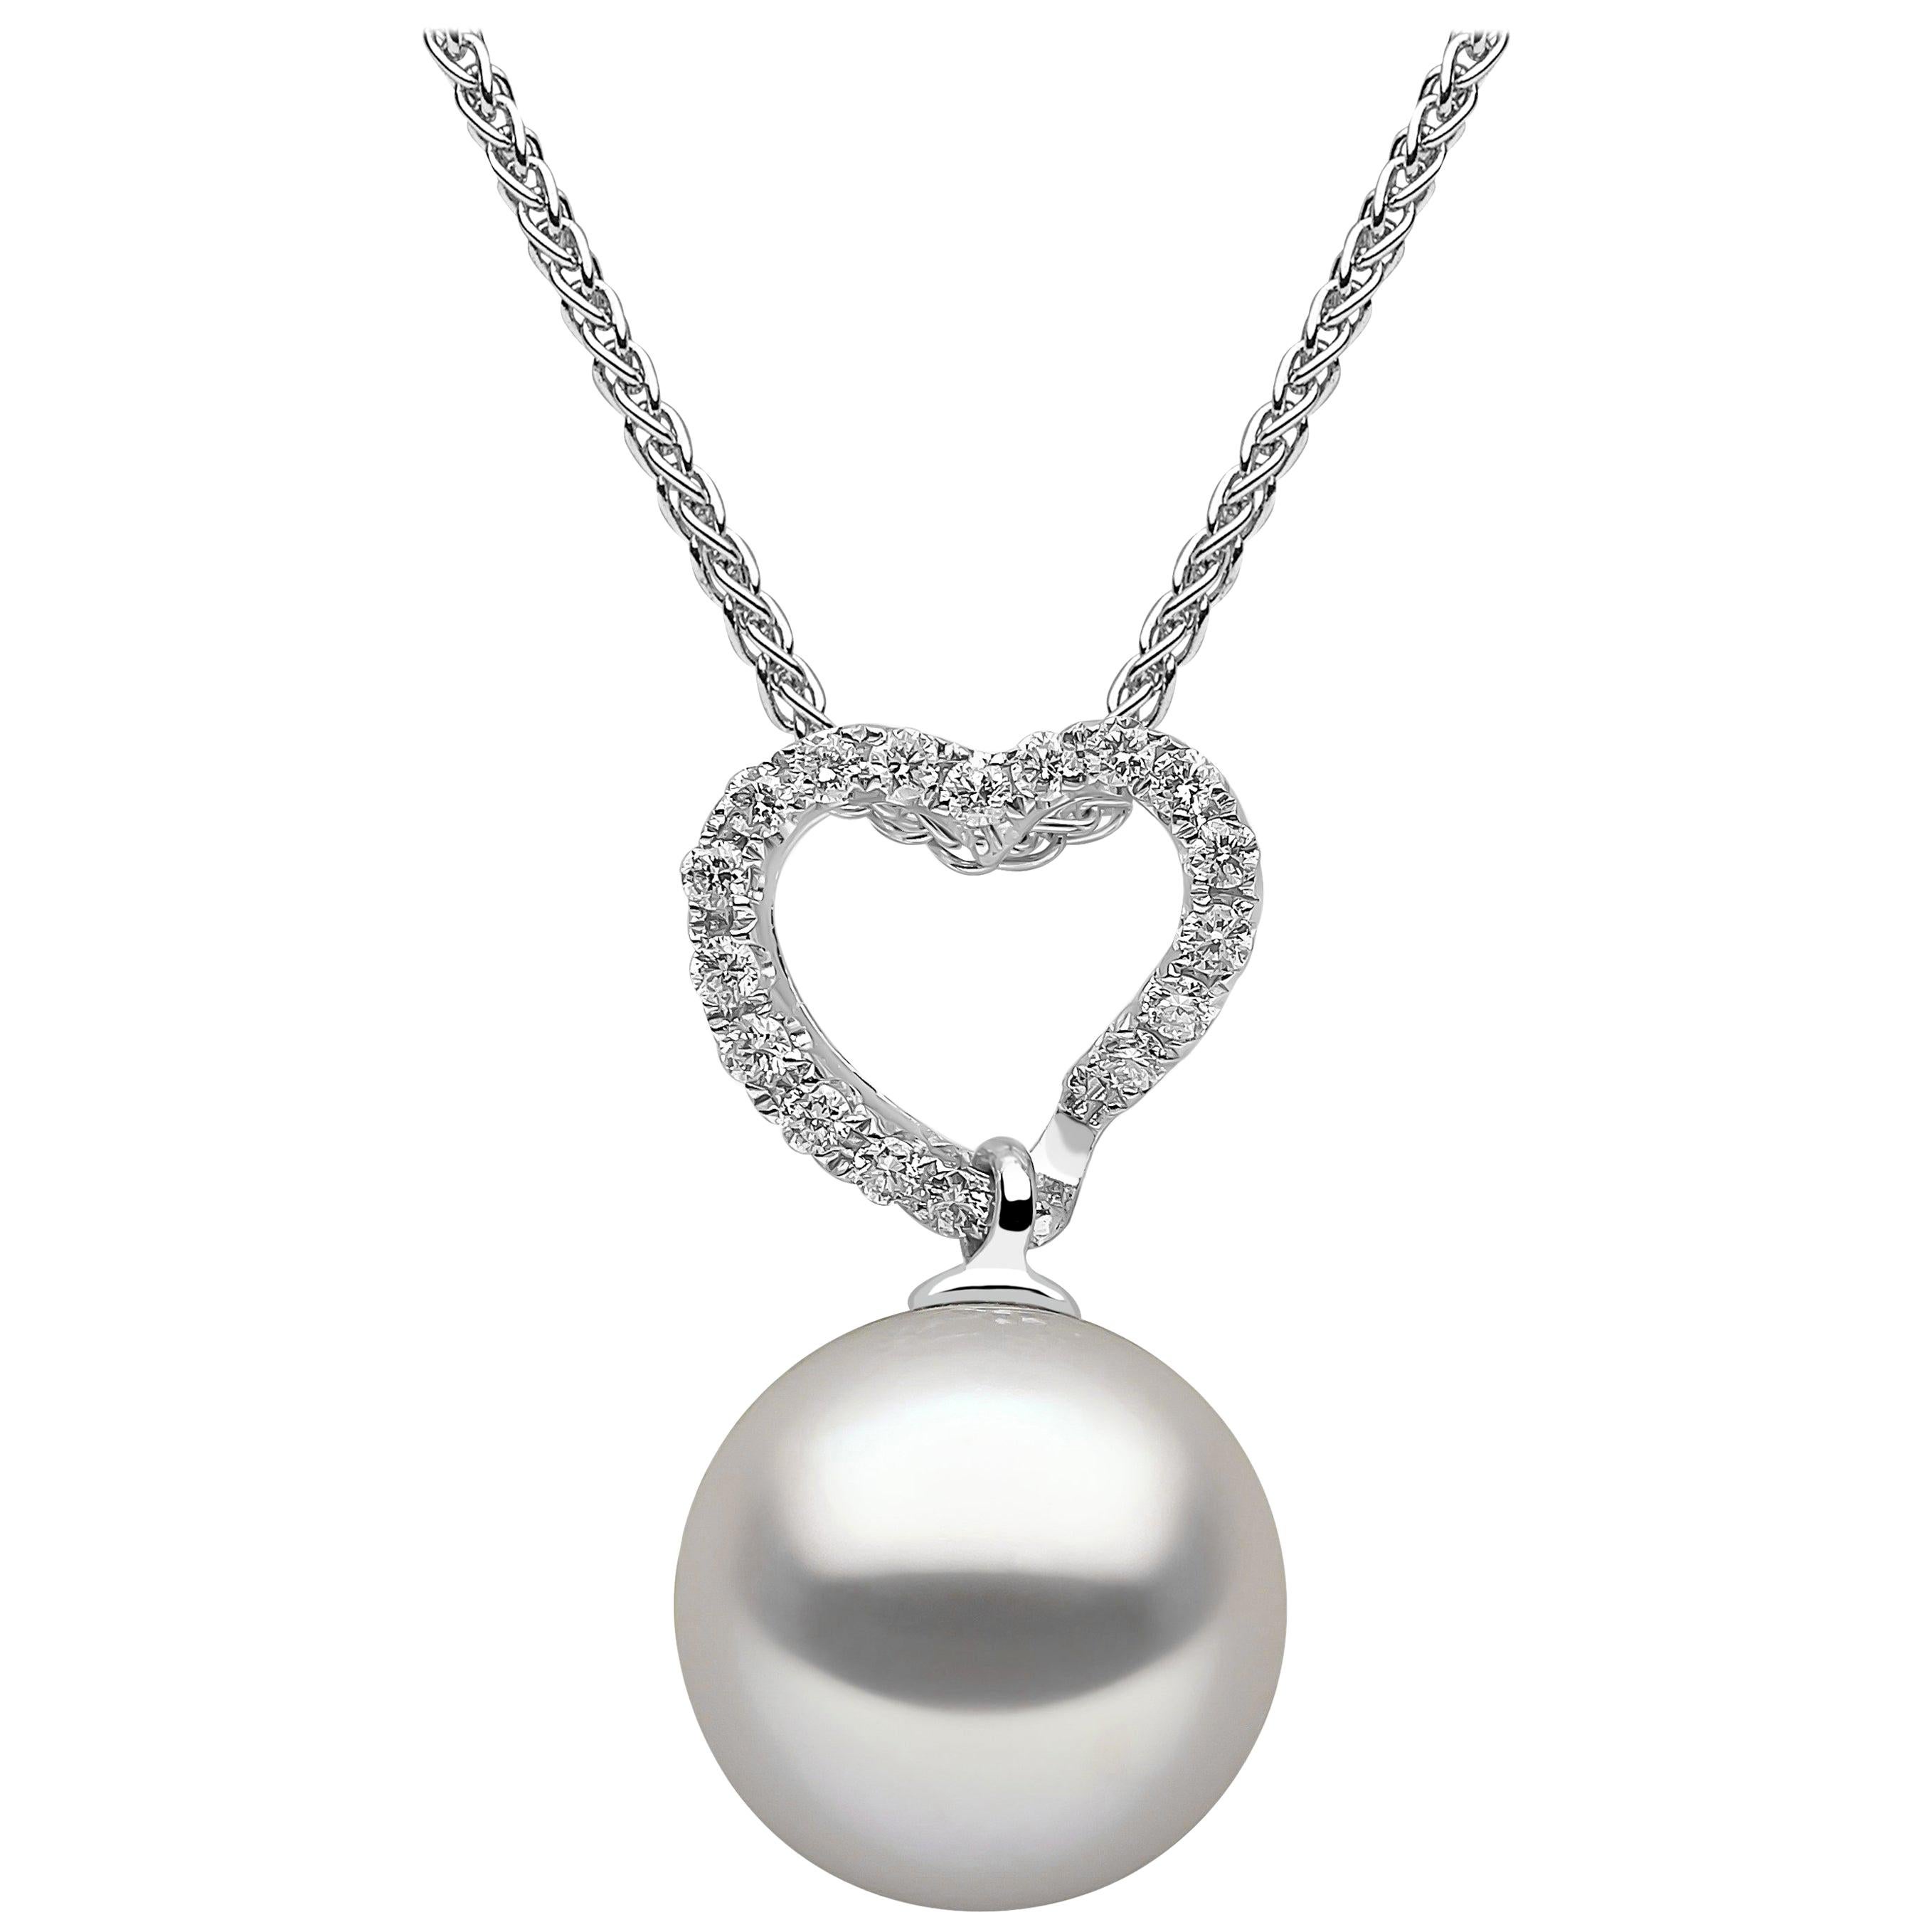 Yoko London Freshwater Pearl and Diamond Necklace in 18 Karat White Gold